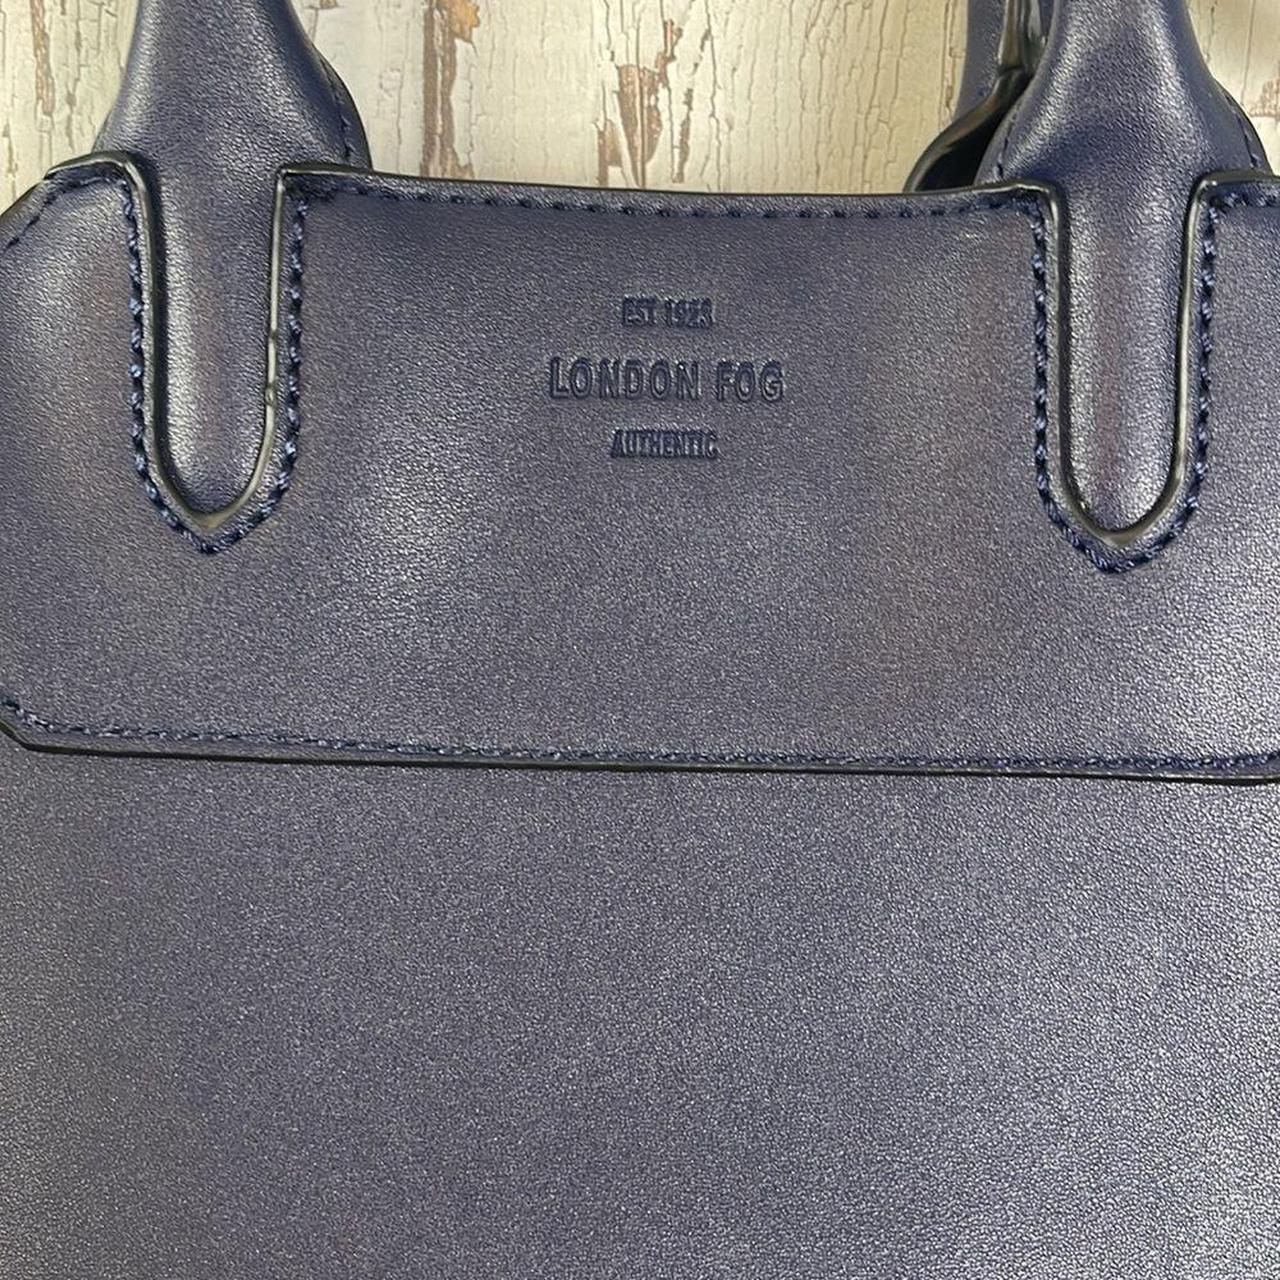 London Fog Women's Grey and Blue Bag (2)